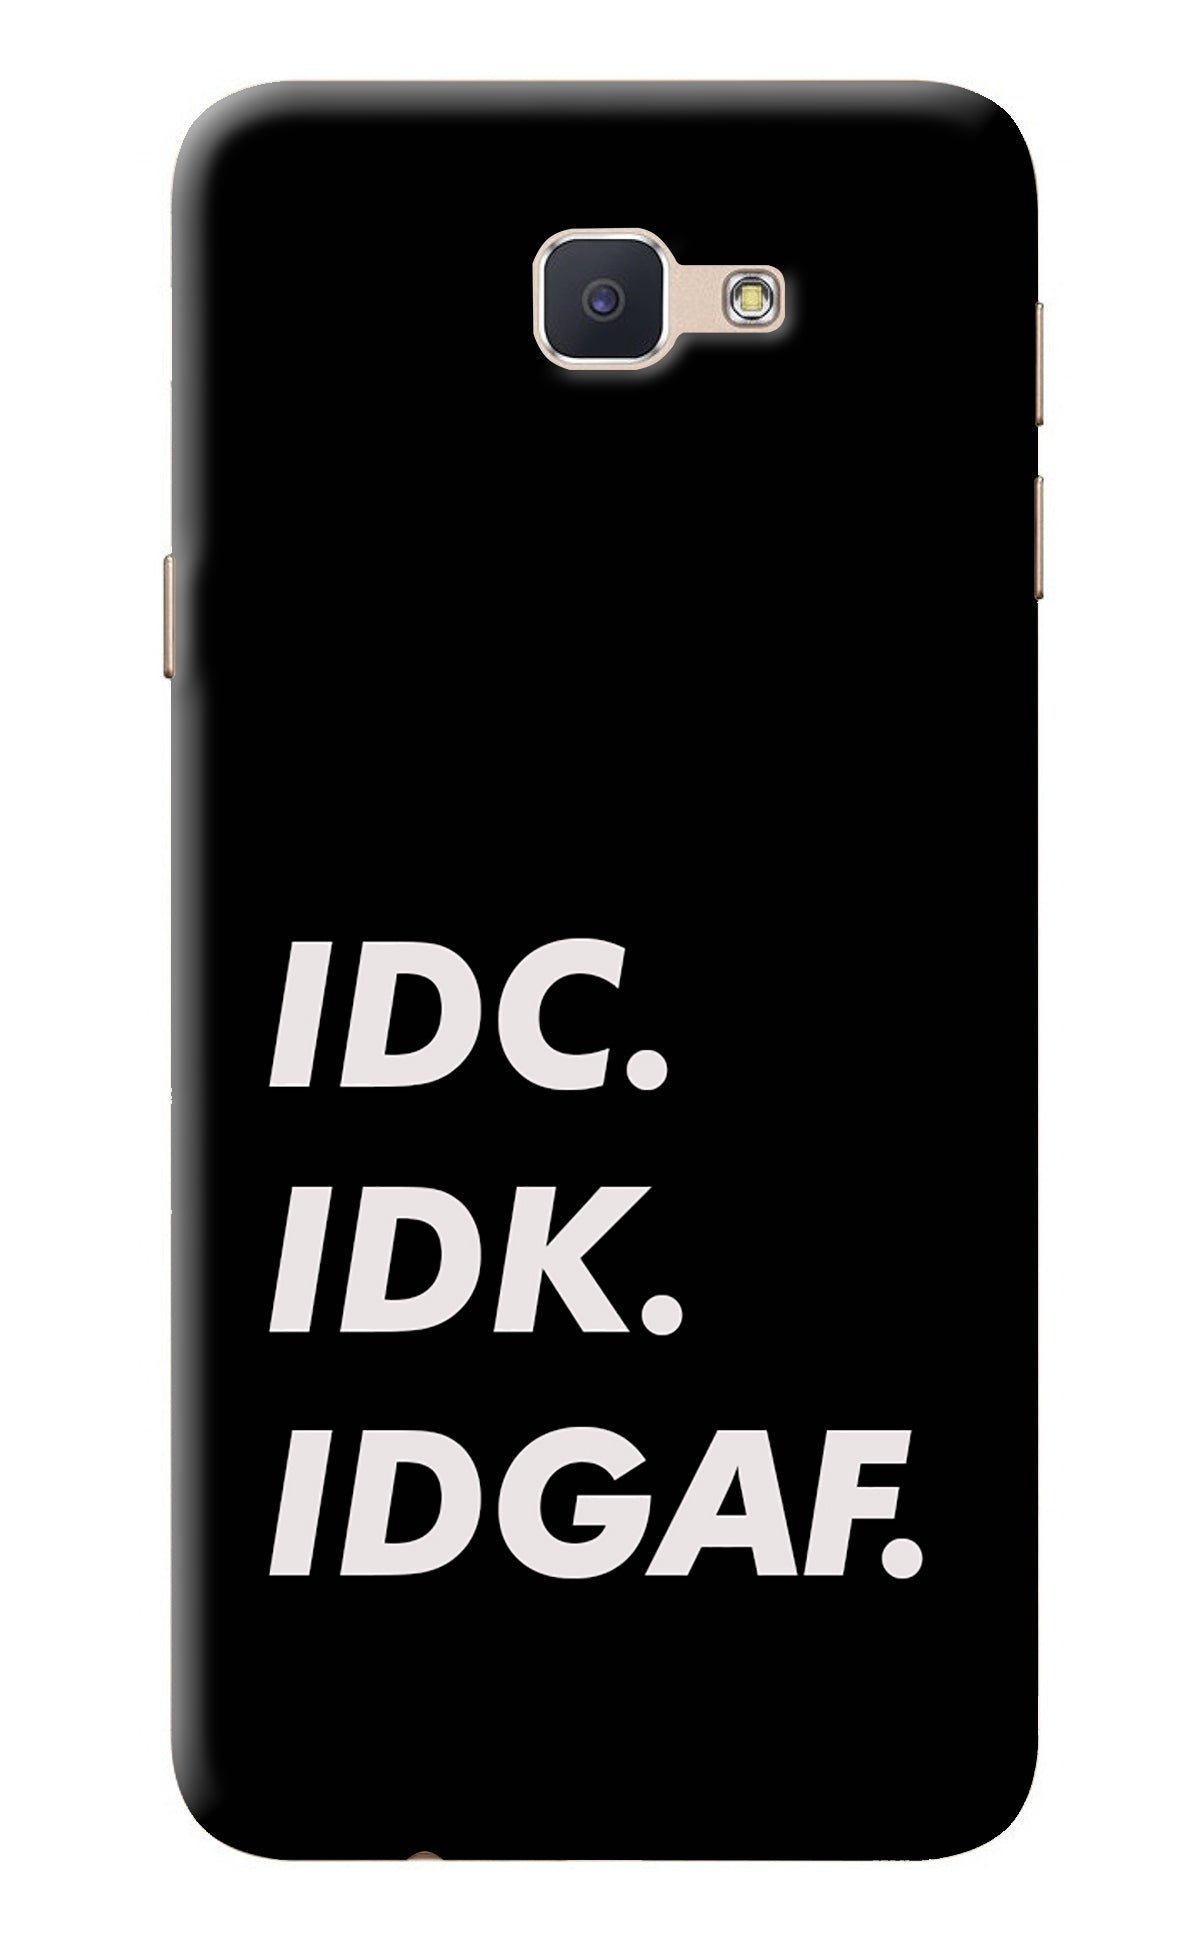 Idc Idk Idgaf Samsung J7 Prime Back Cover